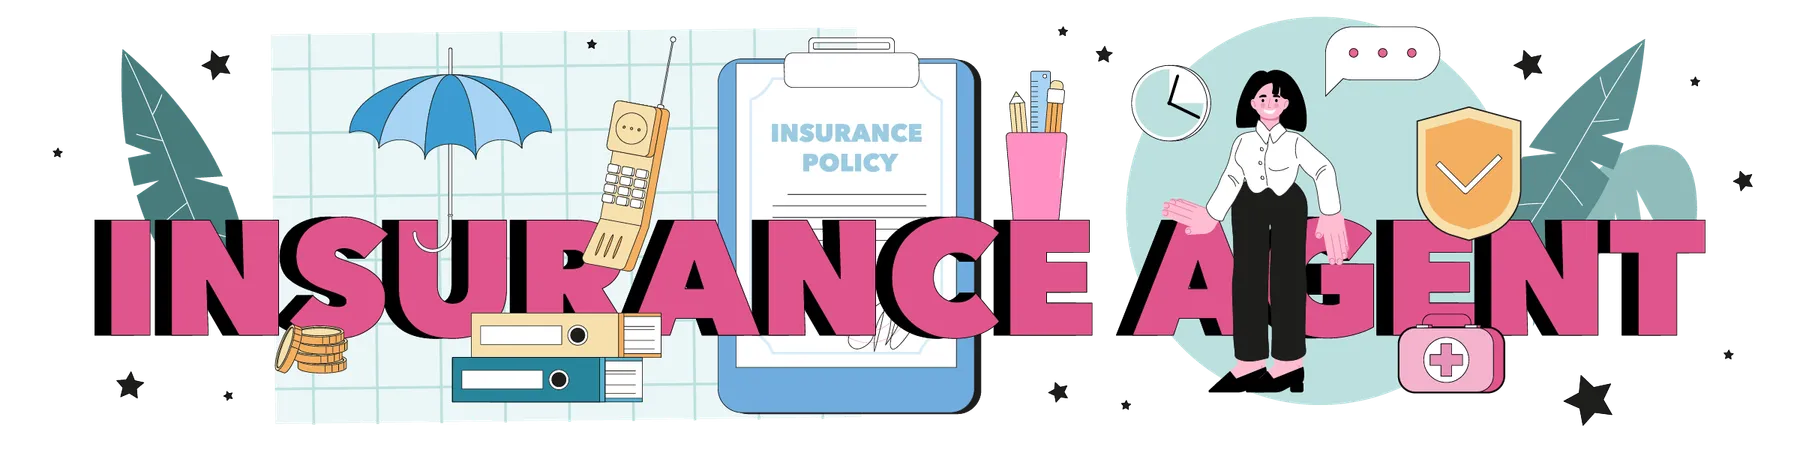 Insurance agent typographic header  Illustration